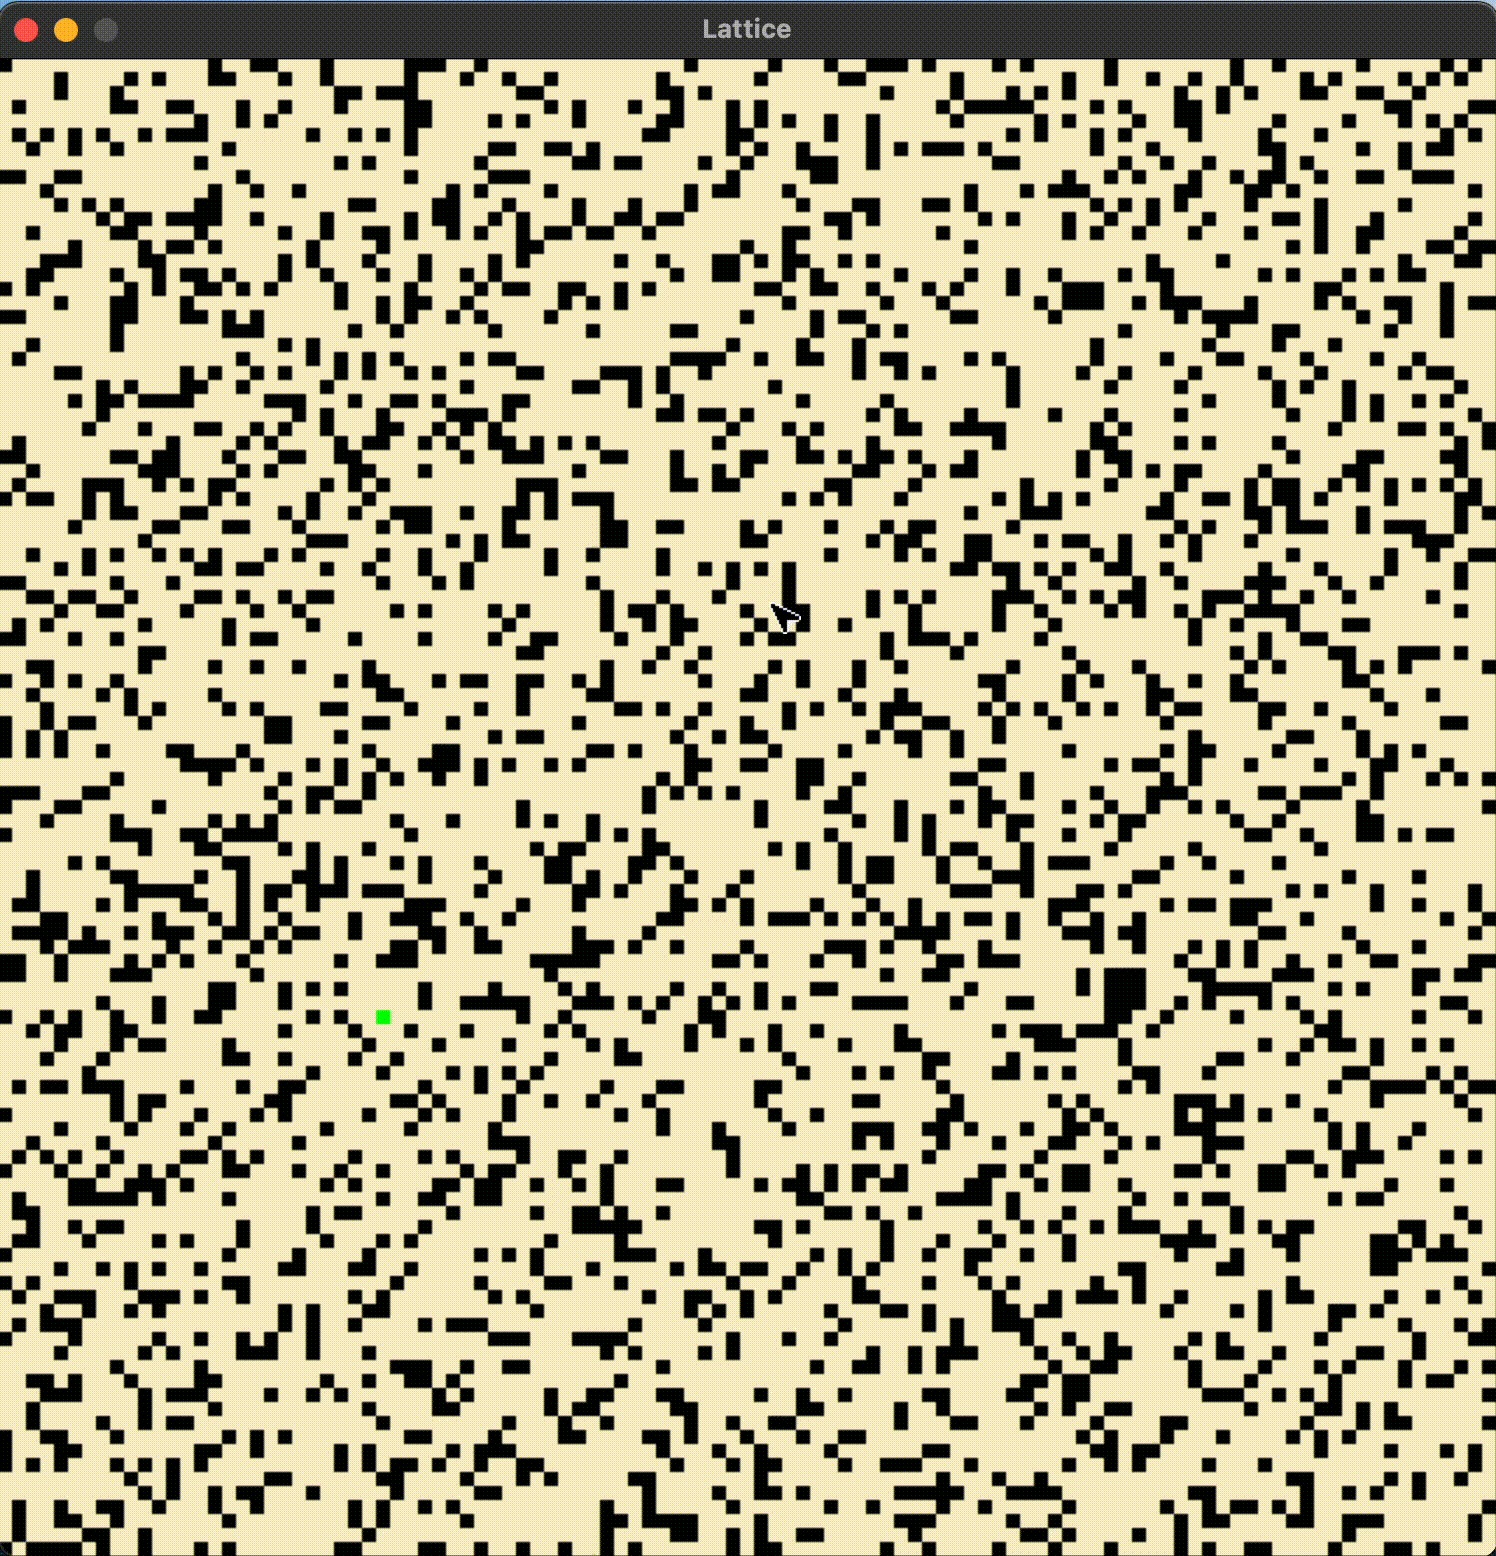 BFS on a randomized lattice